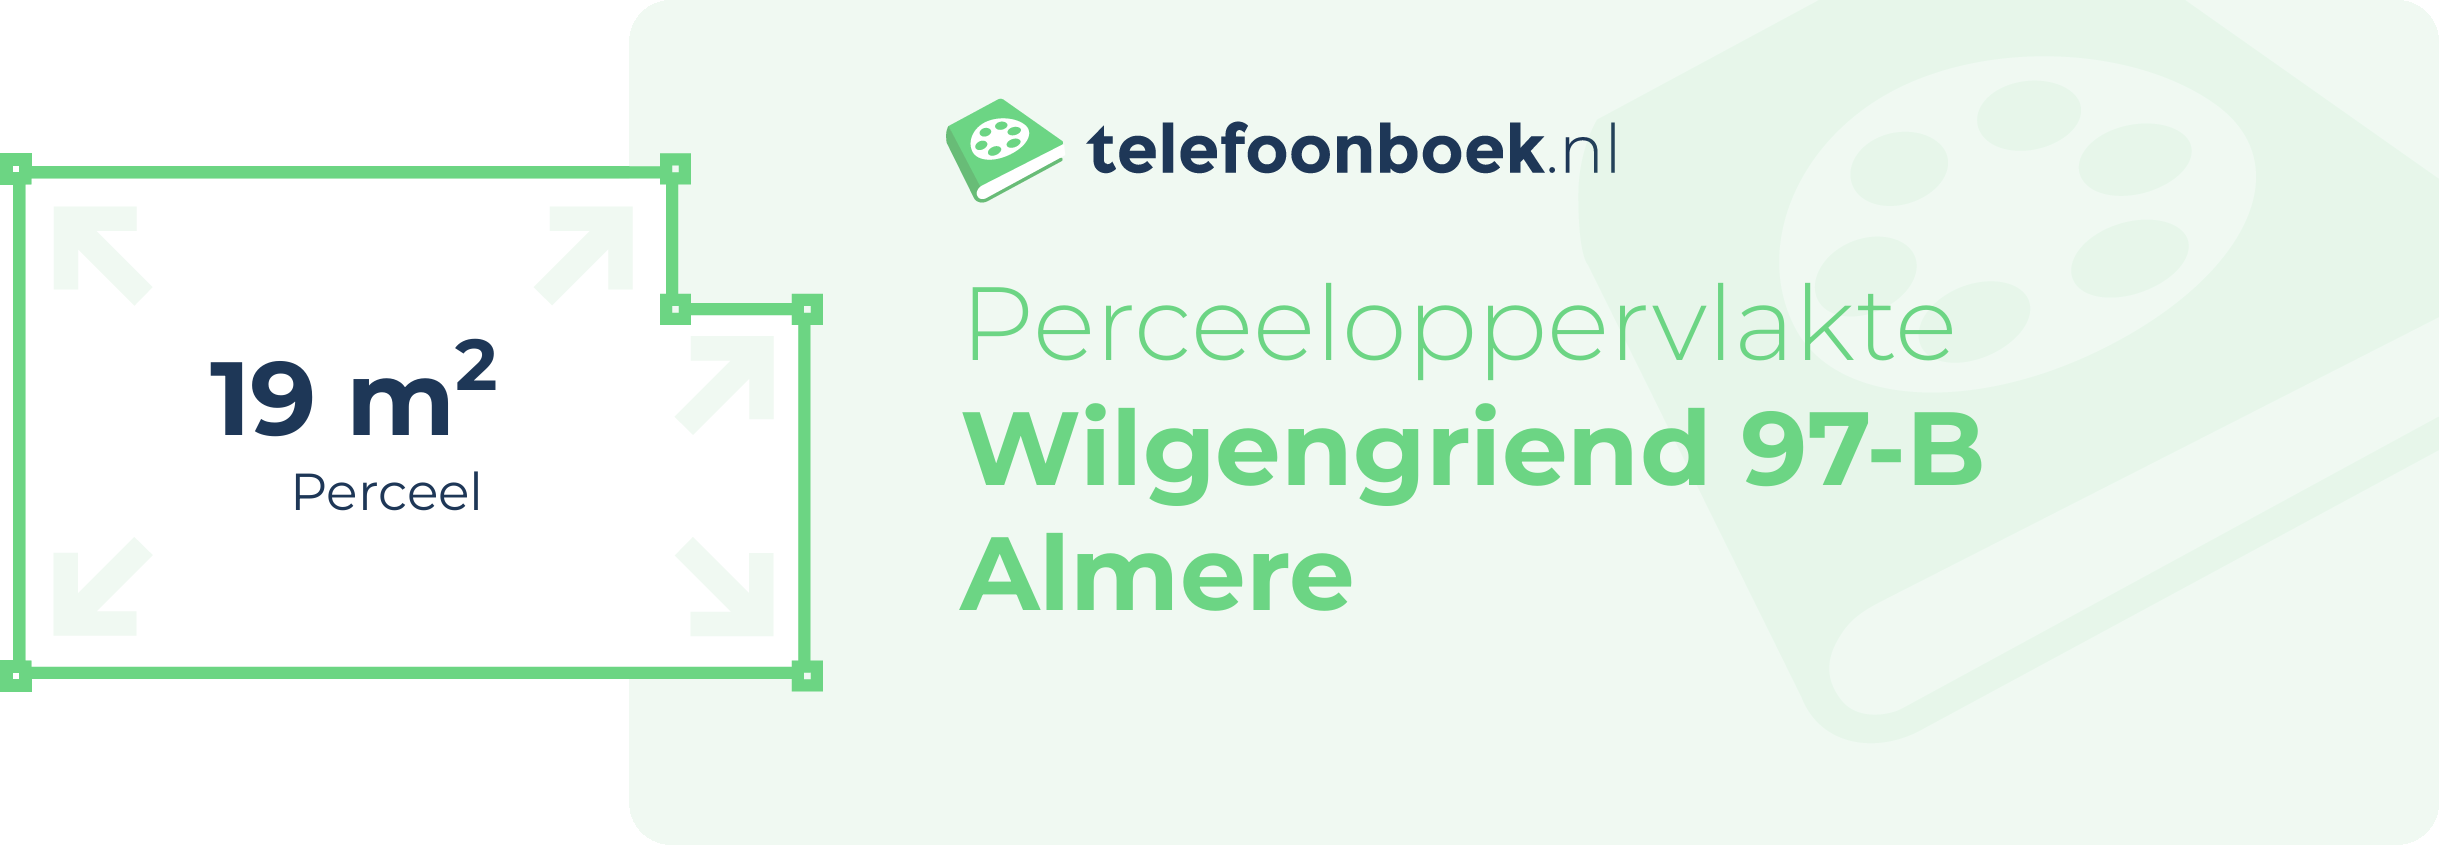 Perceeloppervlakte Wilgengriend 97-B Almere